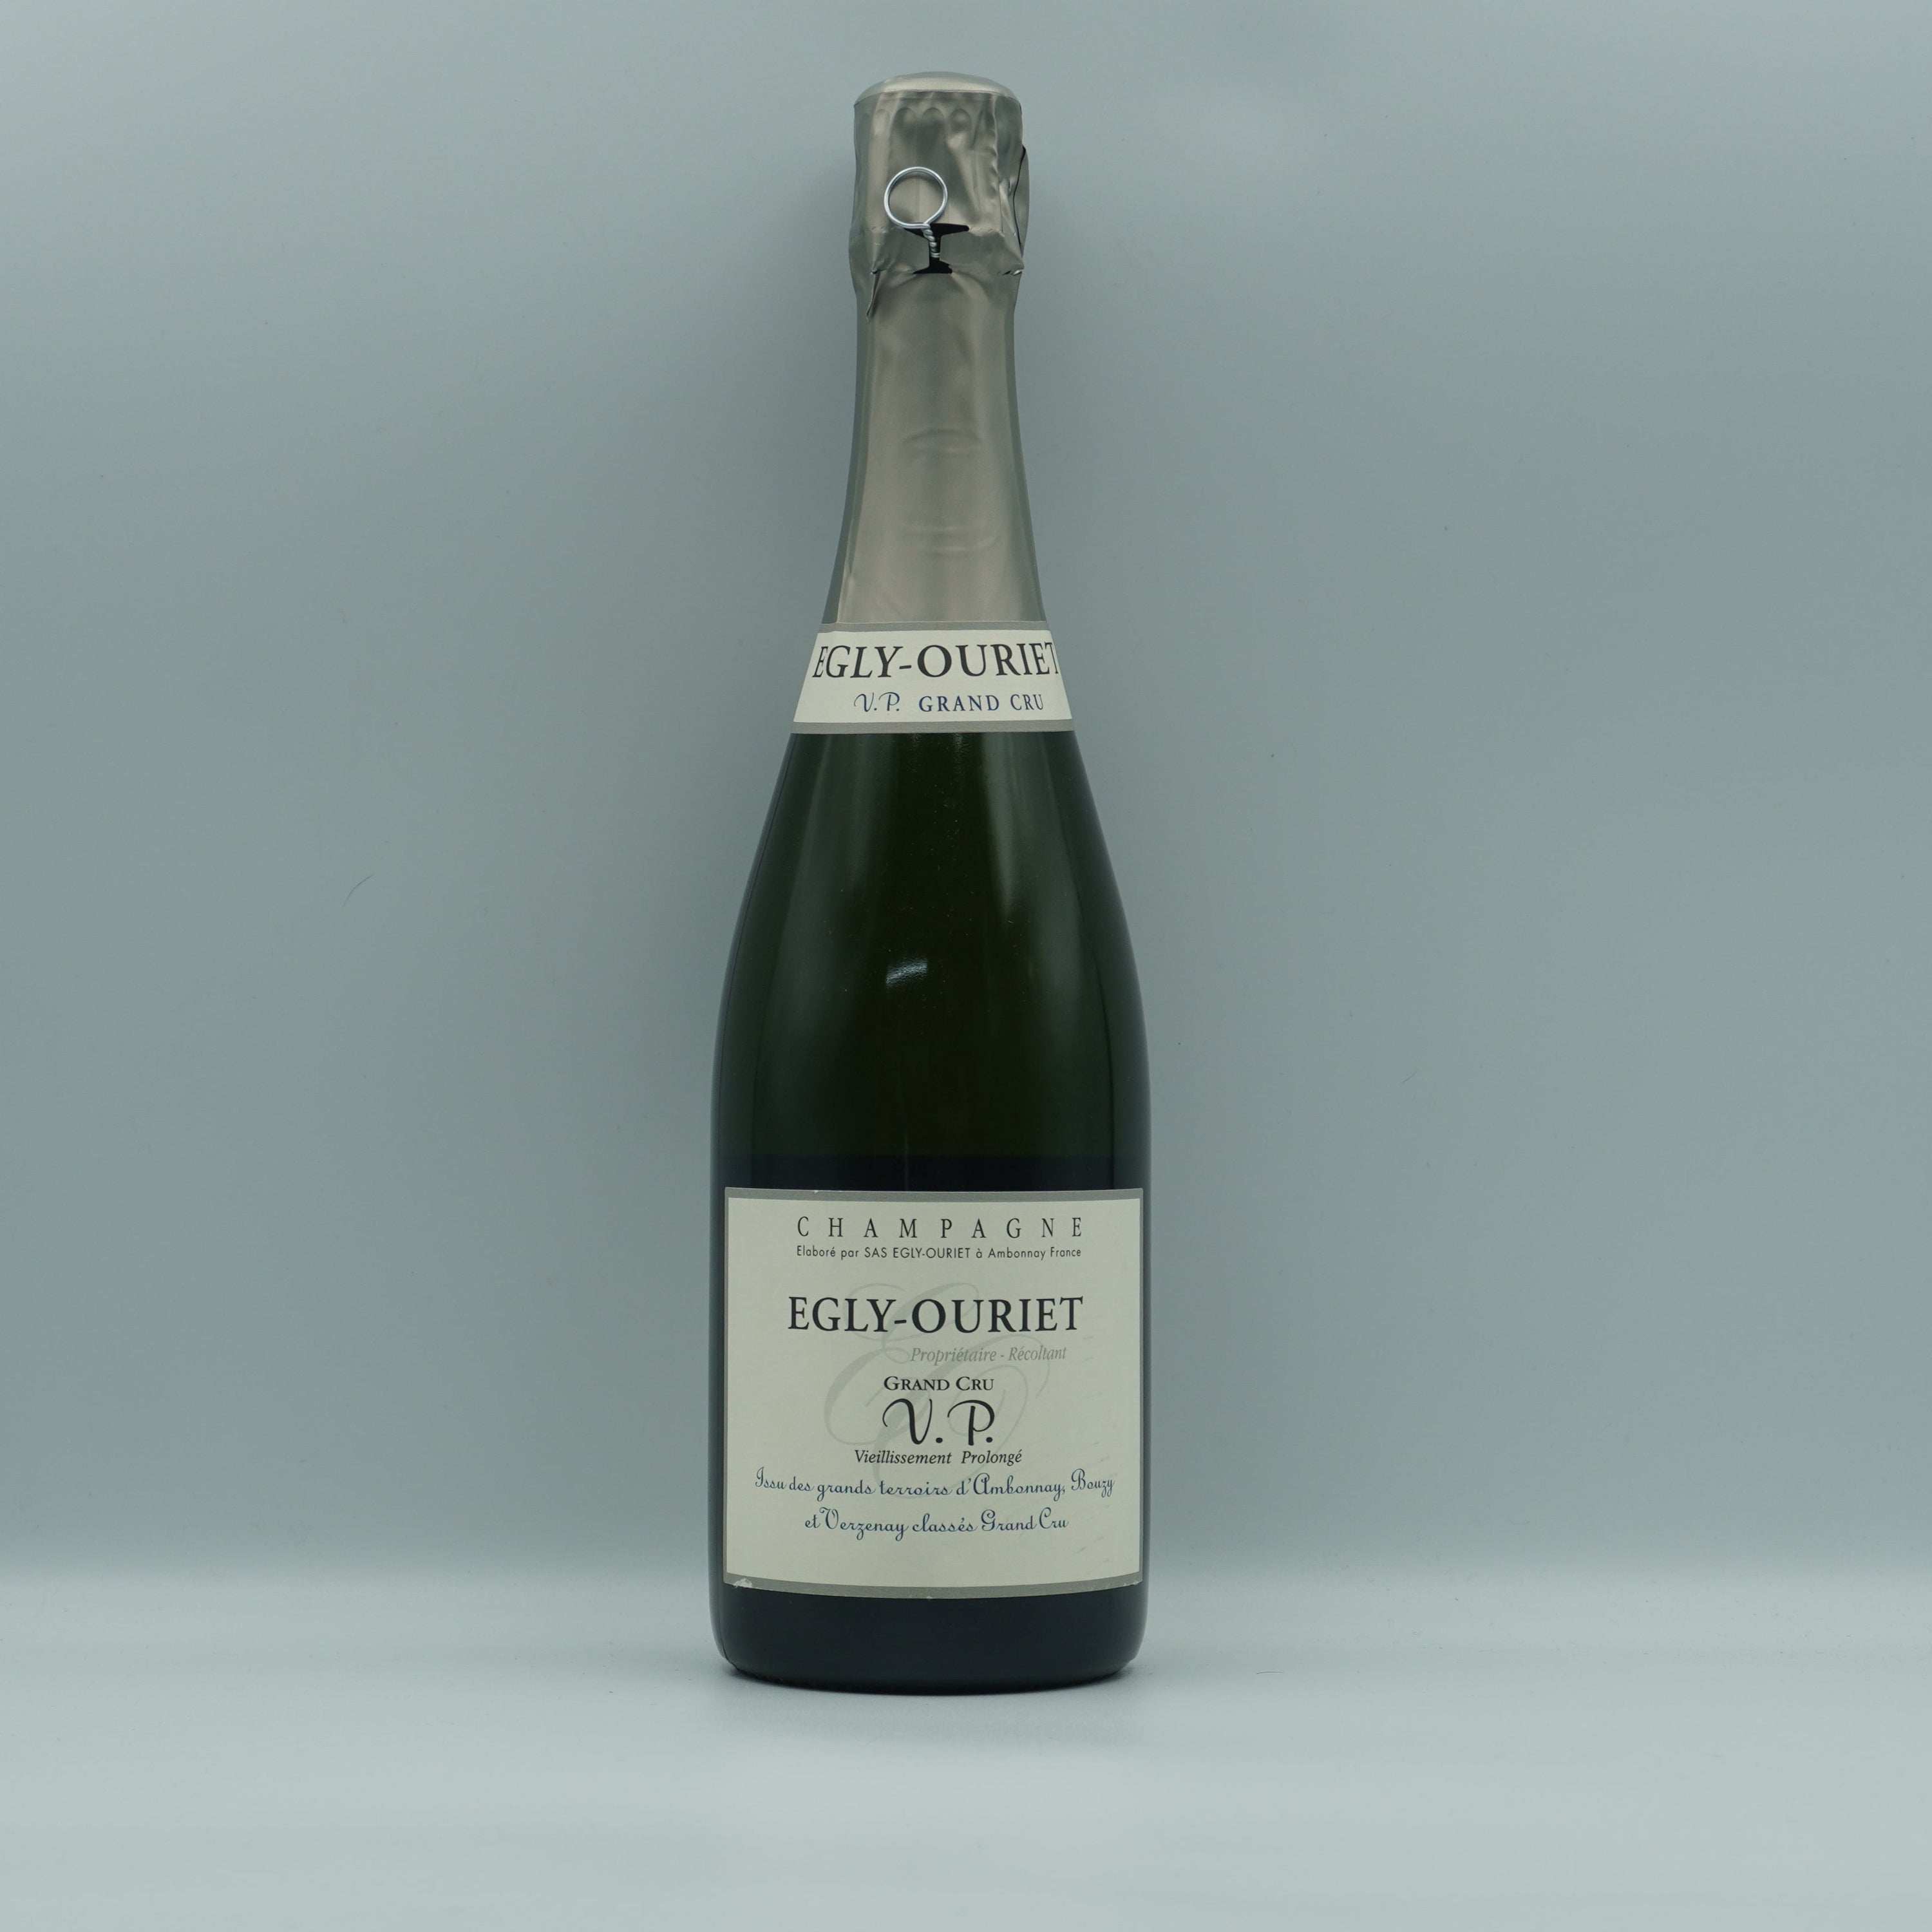 Egly-Ouriet Champagne, Grand Cru V.P. Extra Brut NV